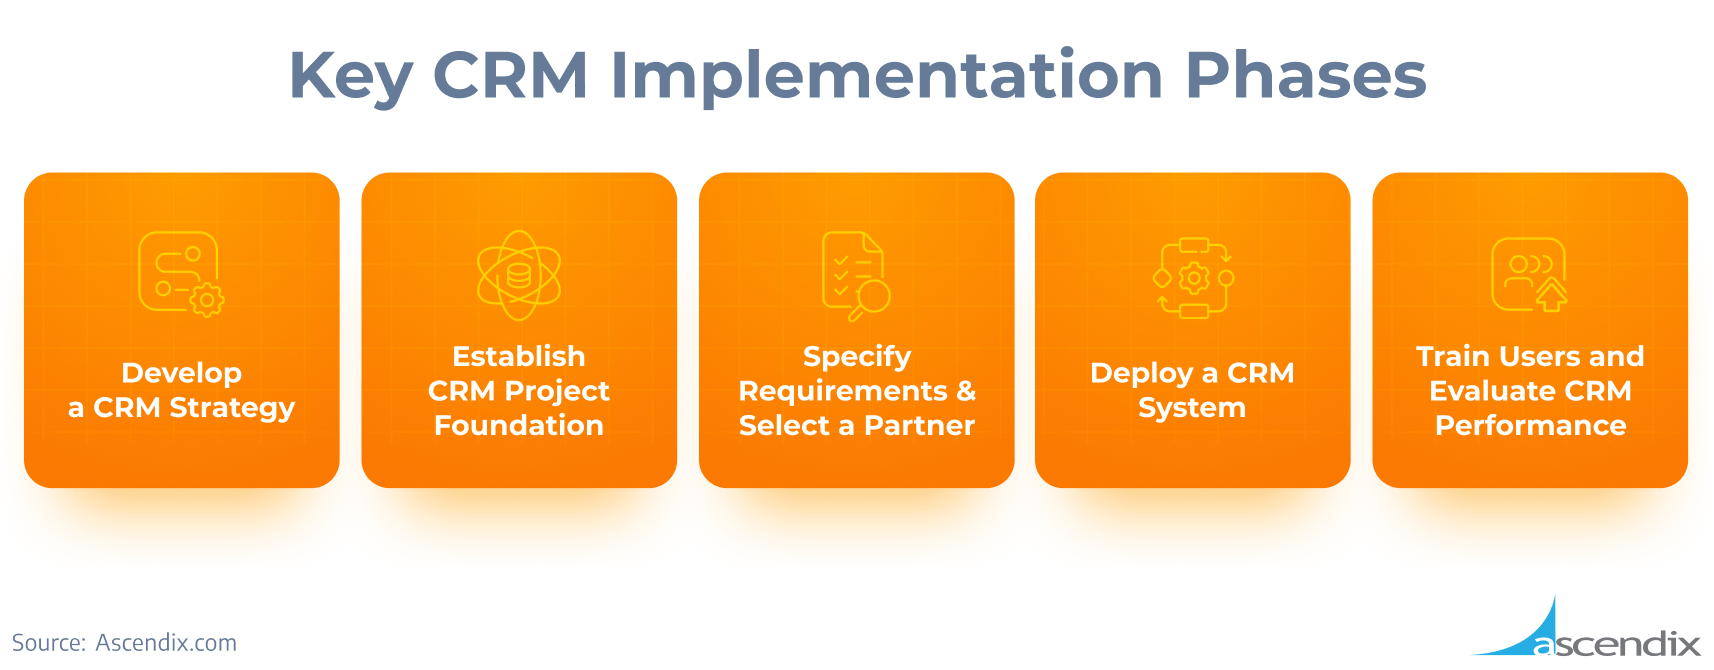 Key CRM Implementation Phases | Ascendix